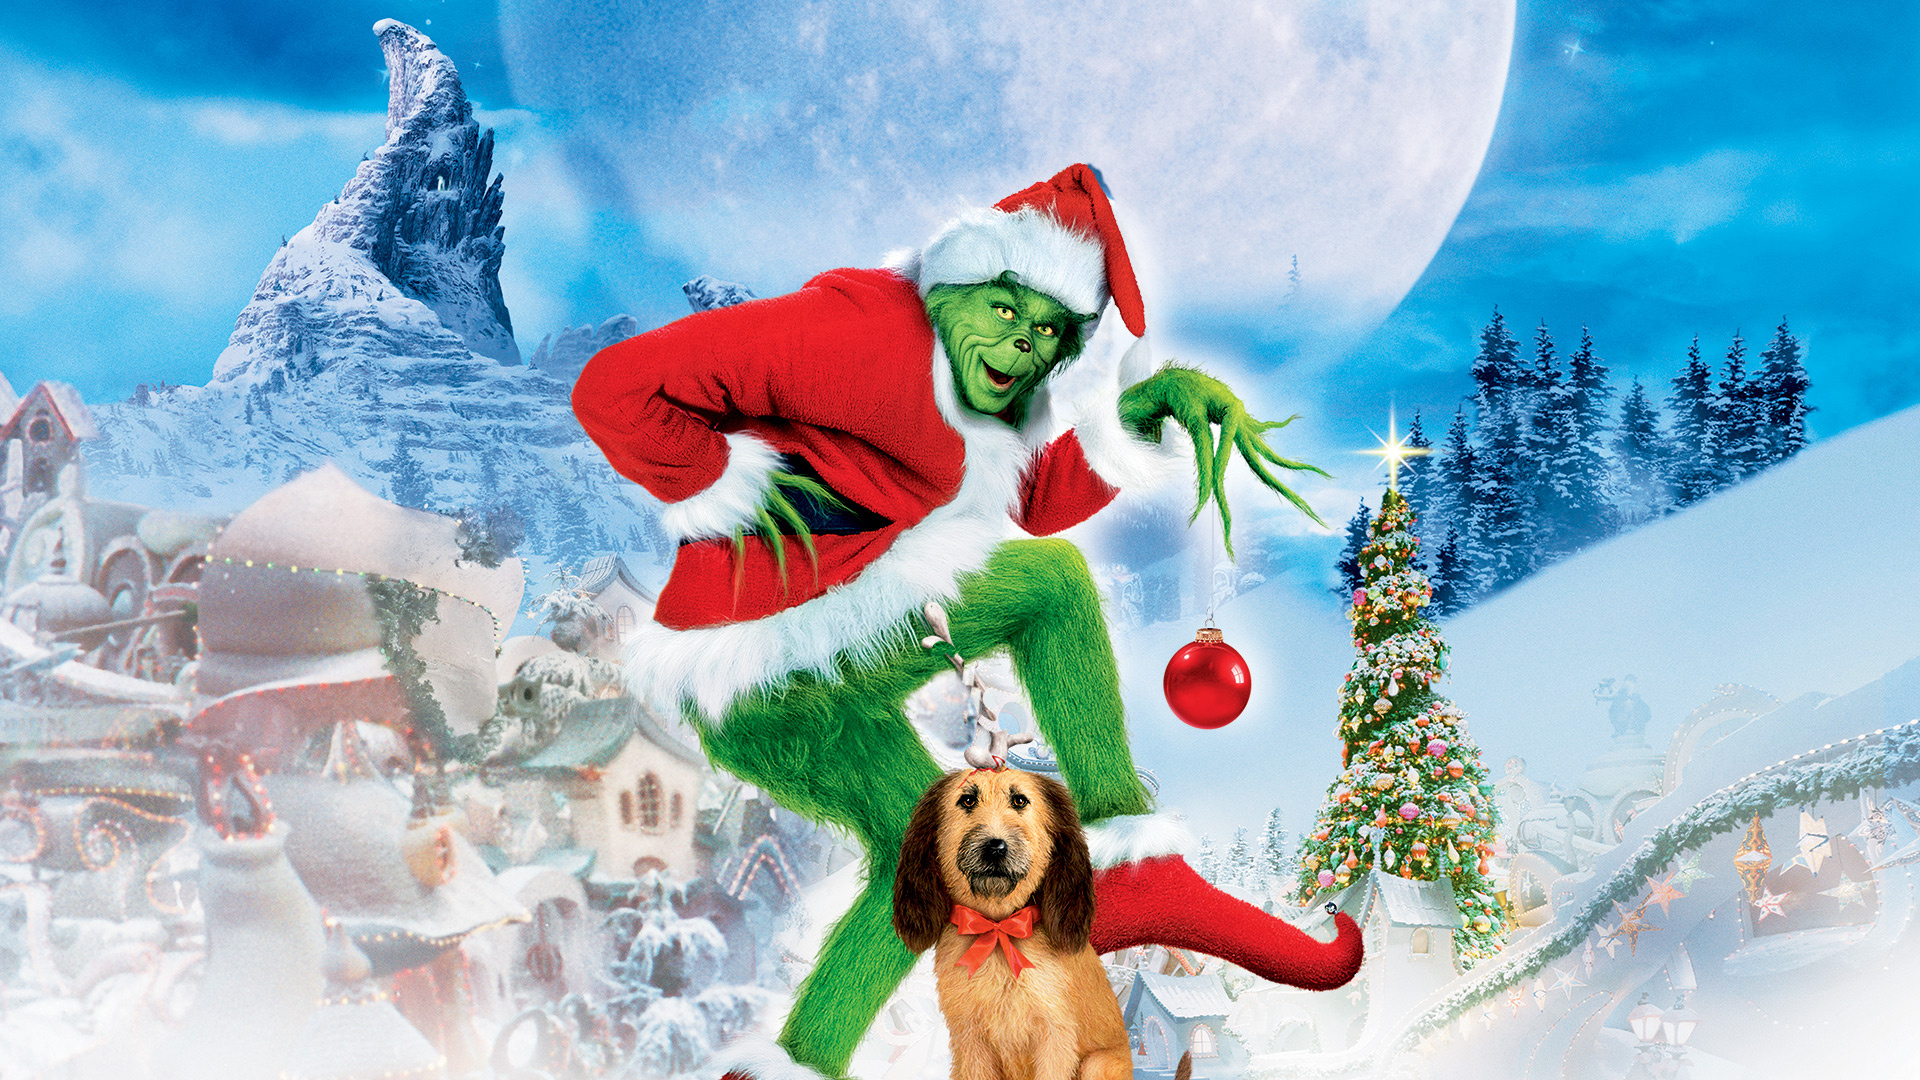 Grinch Stole Christmas, Movie fanart, Grinch Stole Christmas, 1920x1080 Full HD Desktop